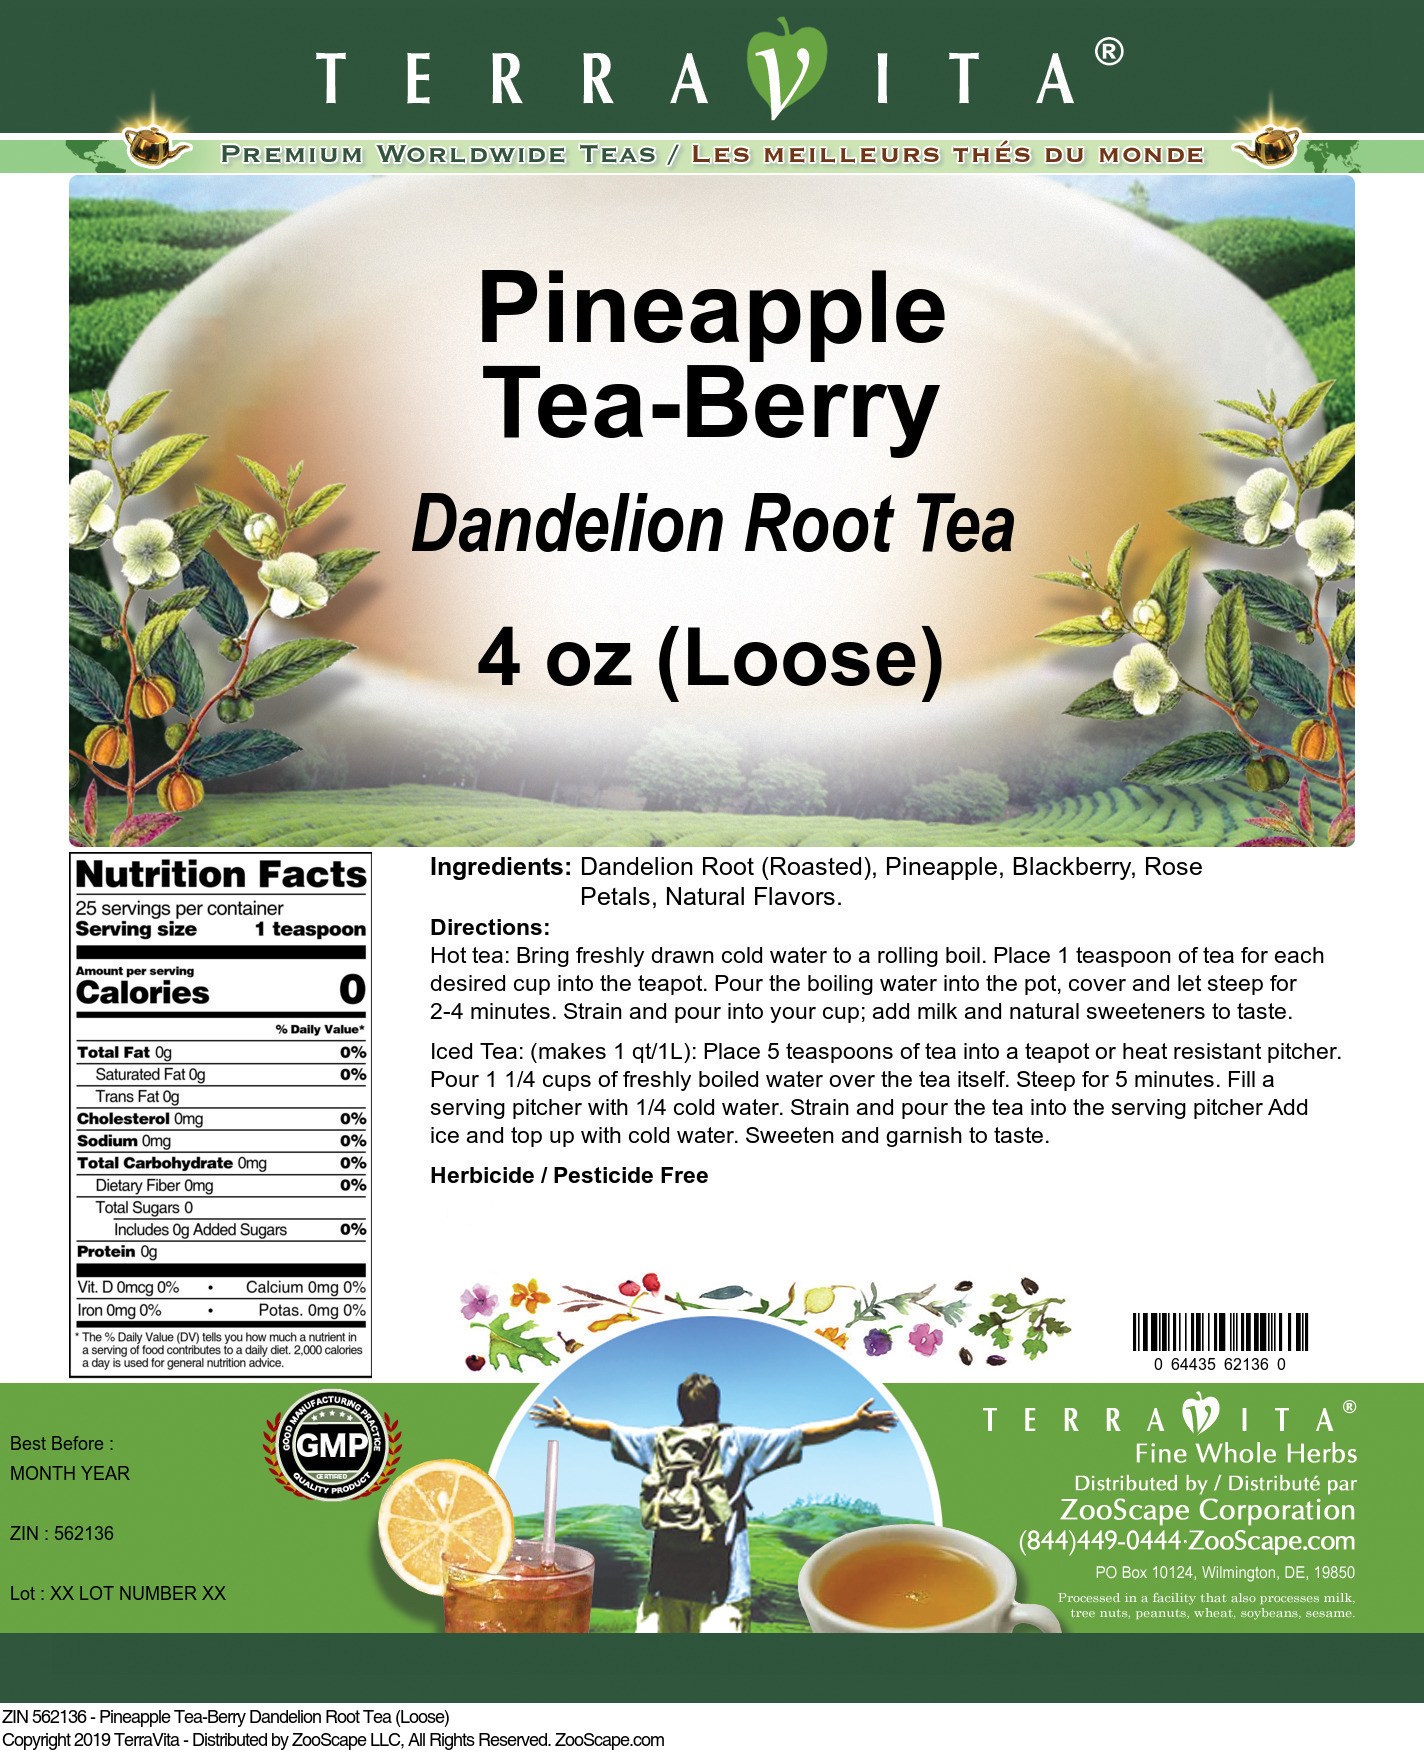 Pineapple Tea-Berry Dandelion Root Tea (Loose) - Label